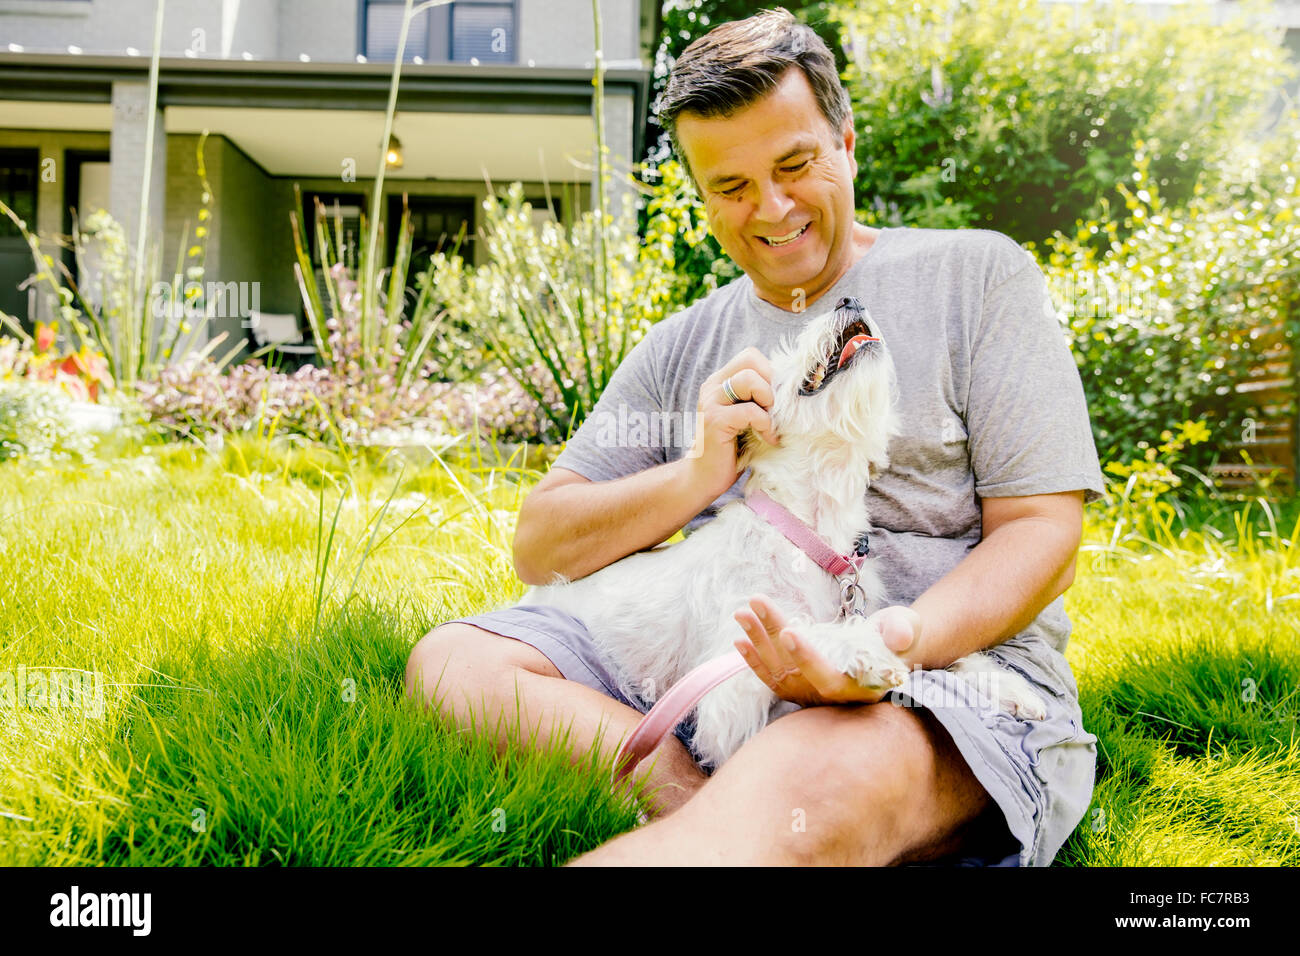 Caucasian man petting dog in grass Stock Photo